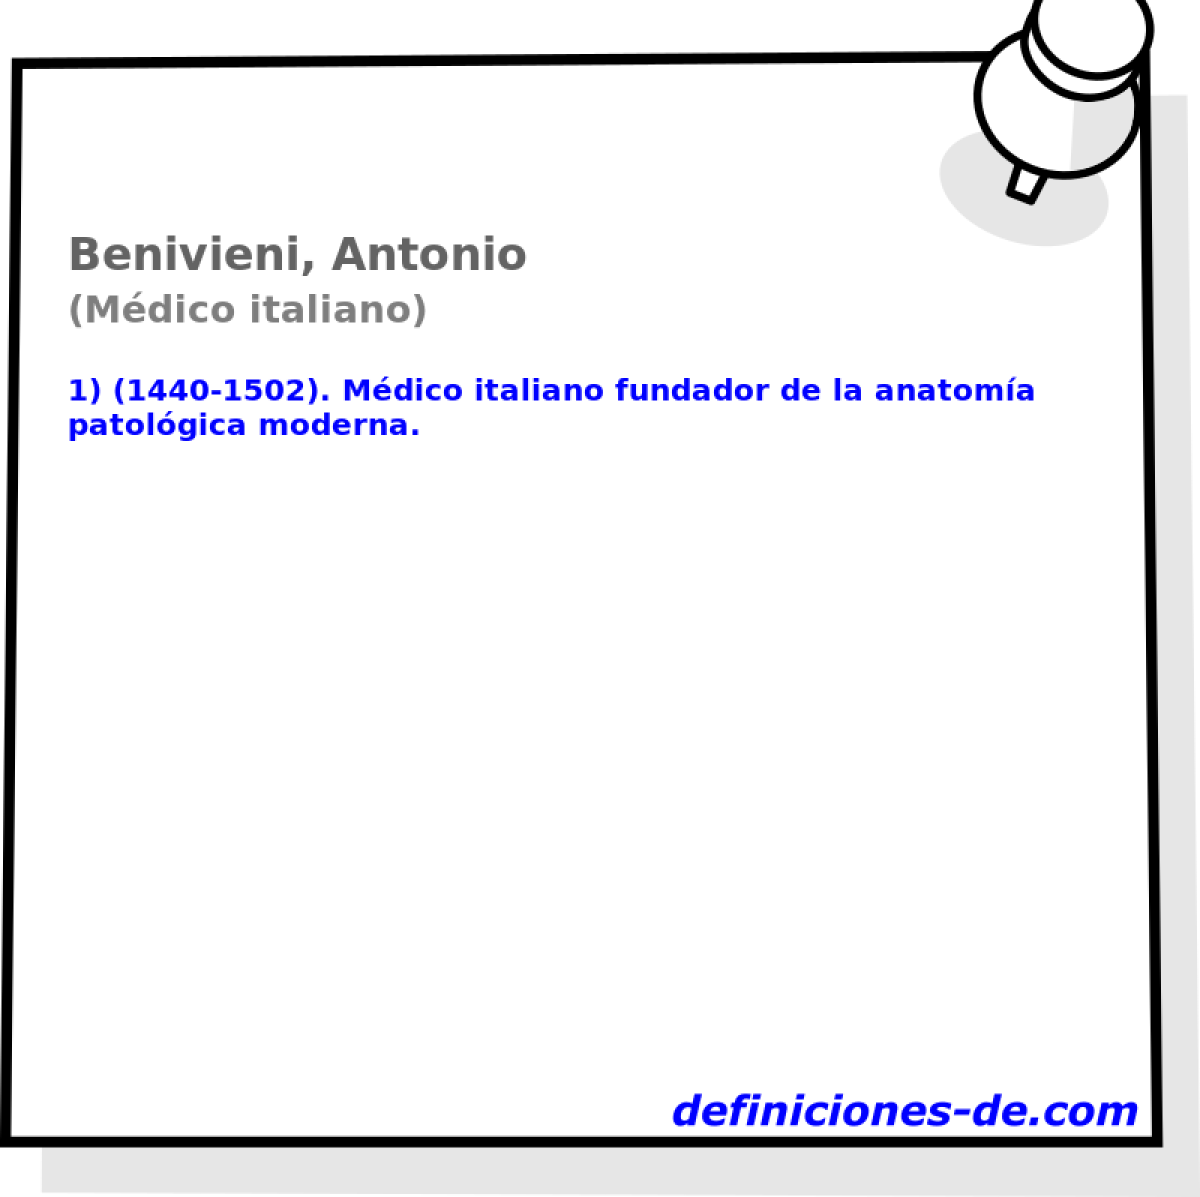 Benivieni, Antonio (Mdico italiano)